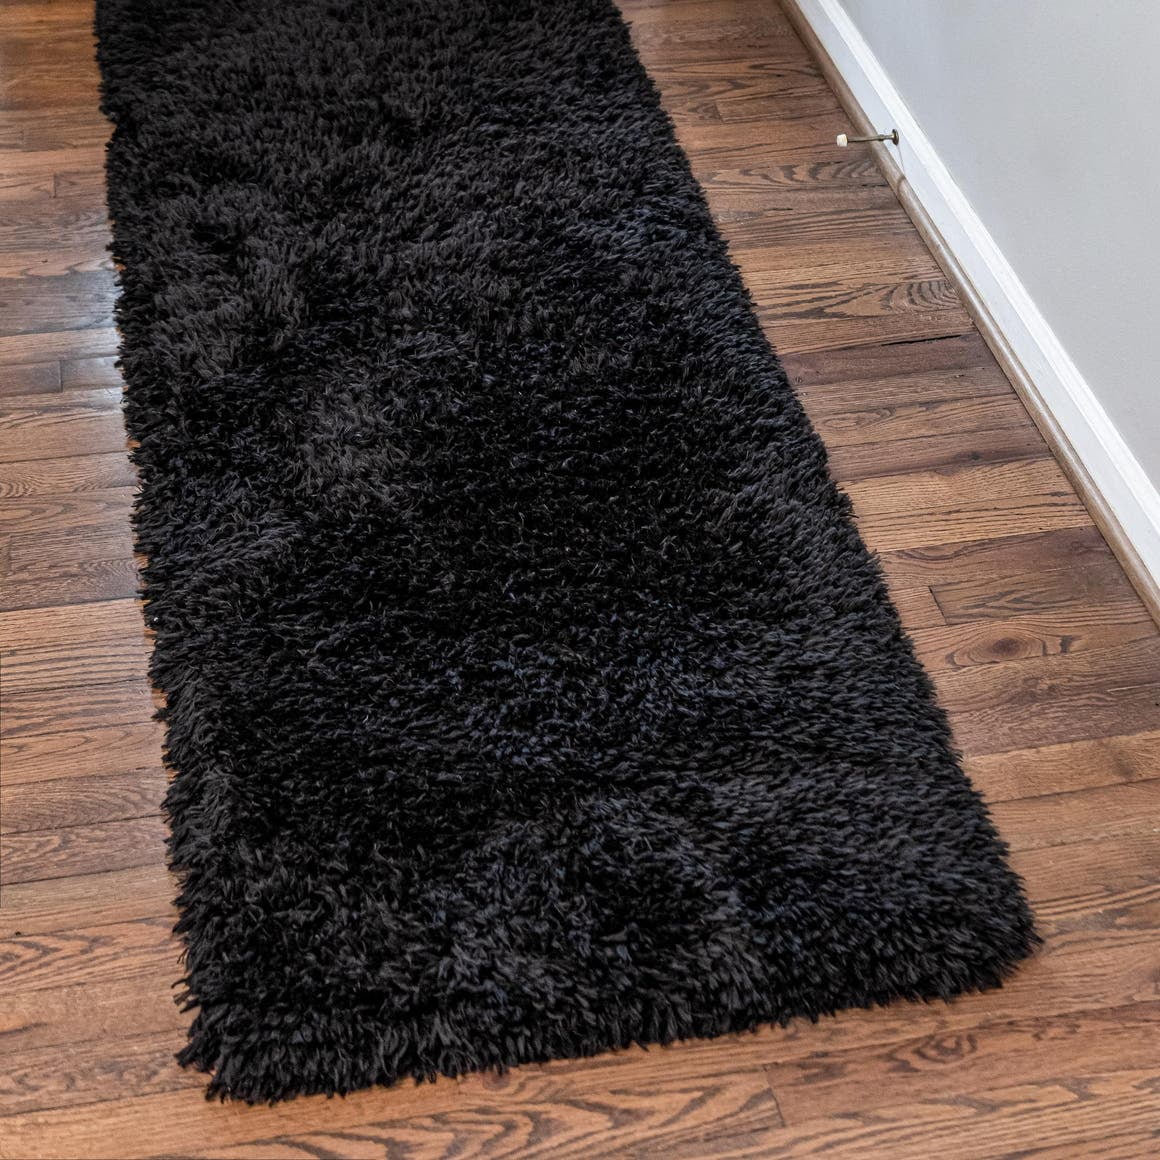 Belgravia Fluffy Shaggy antidérapant épais tapis salon couloir Runer Rugs 